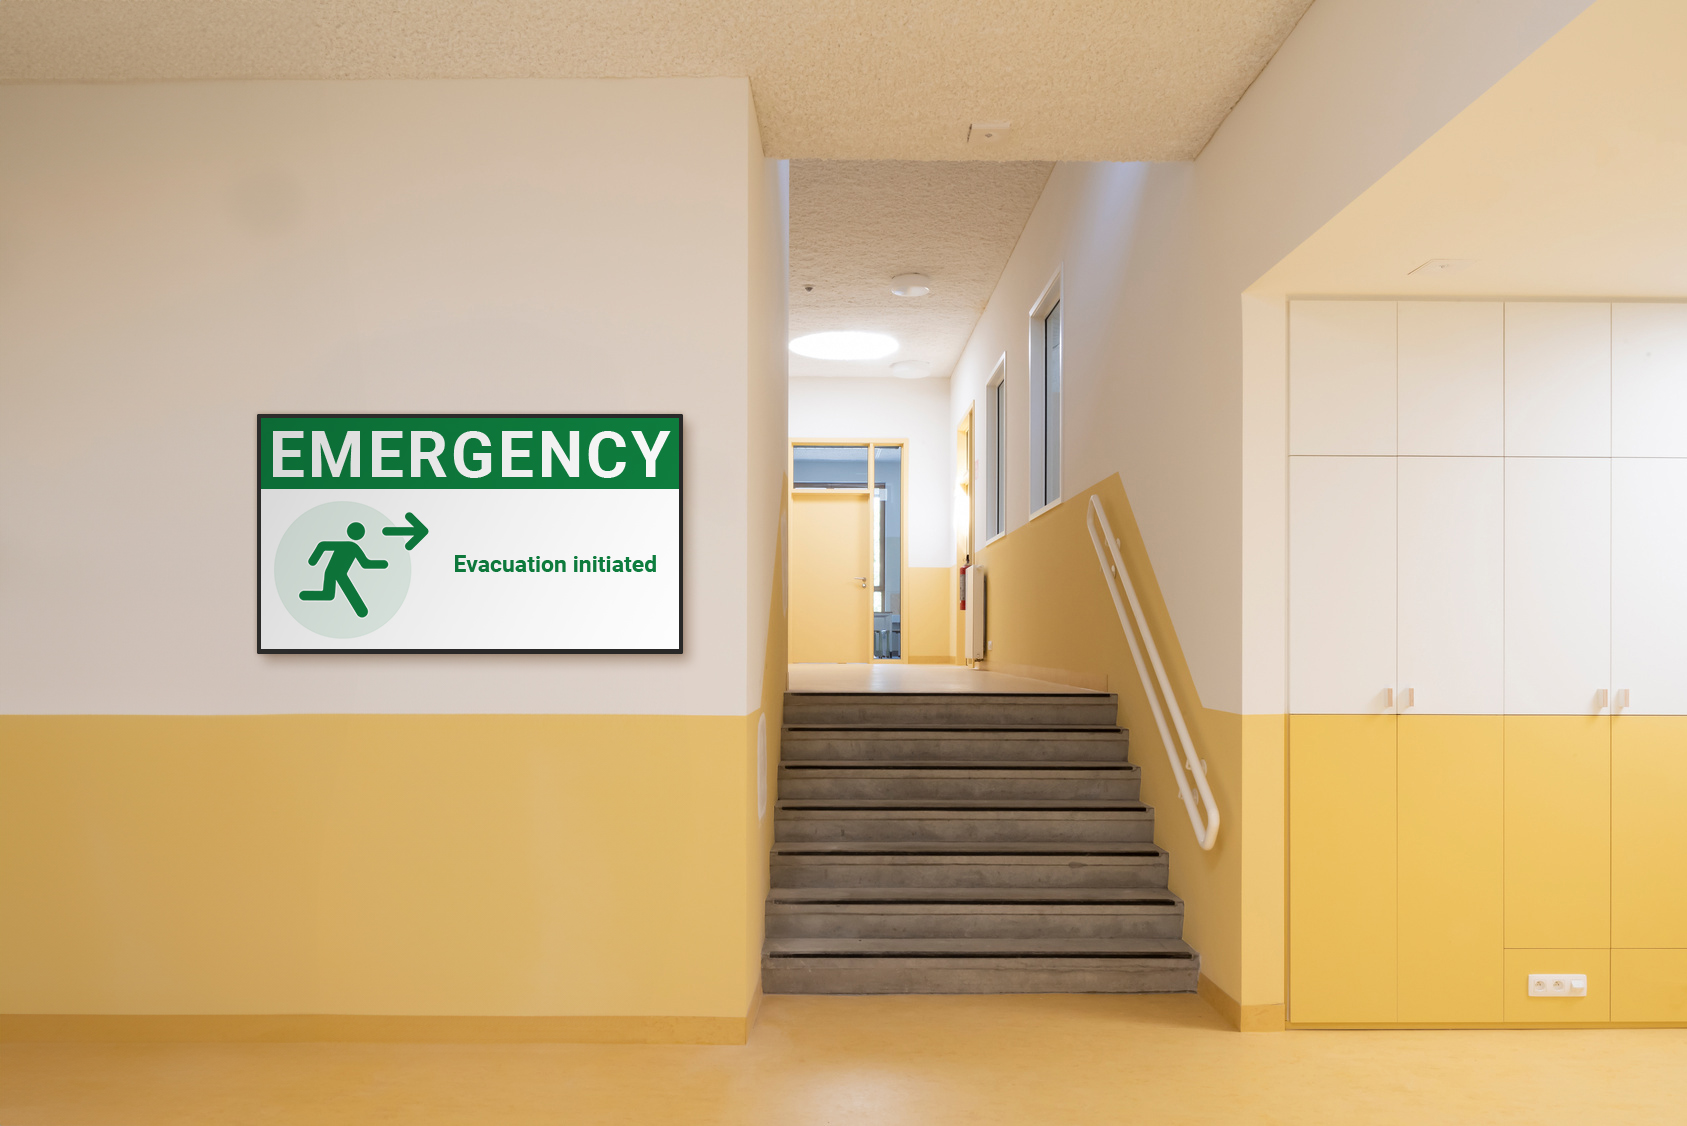 Emergency alert display in school hallway